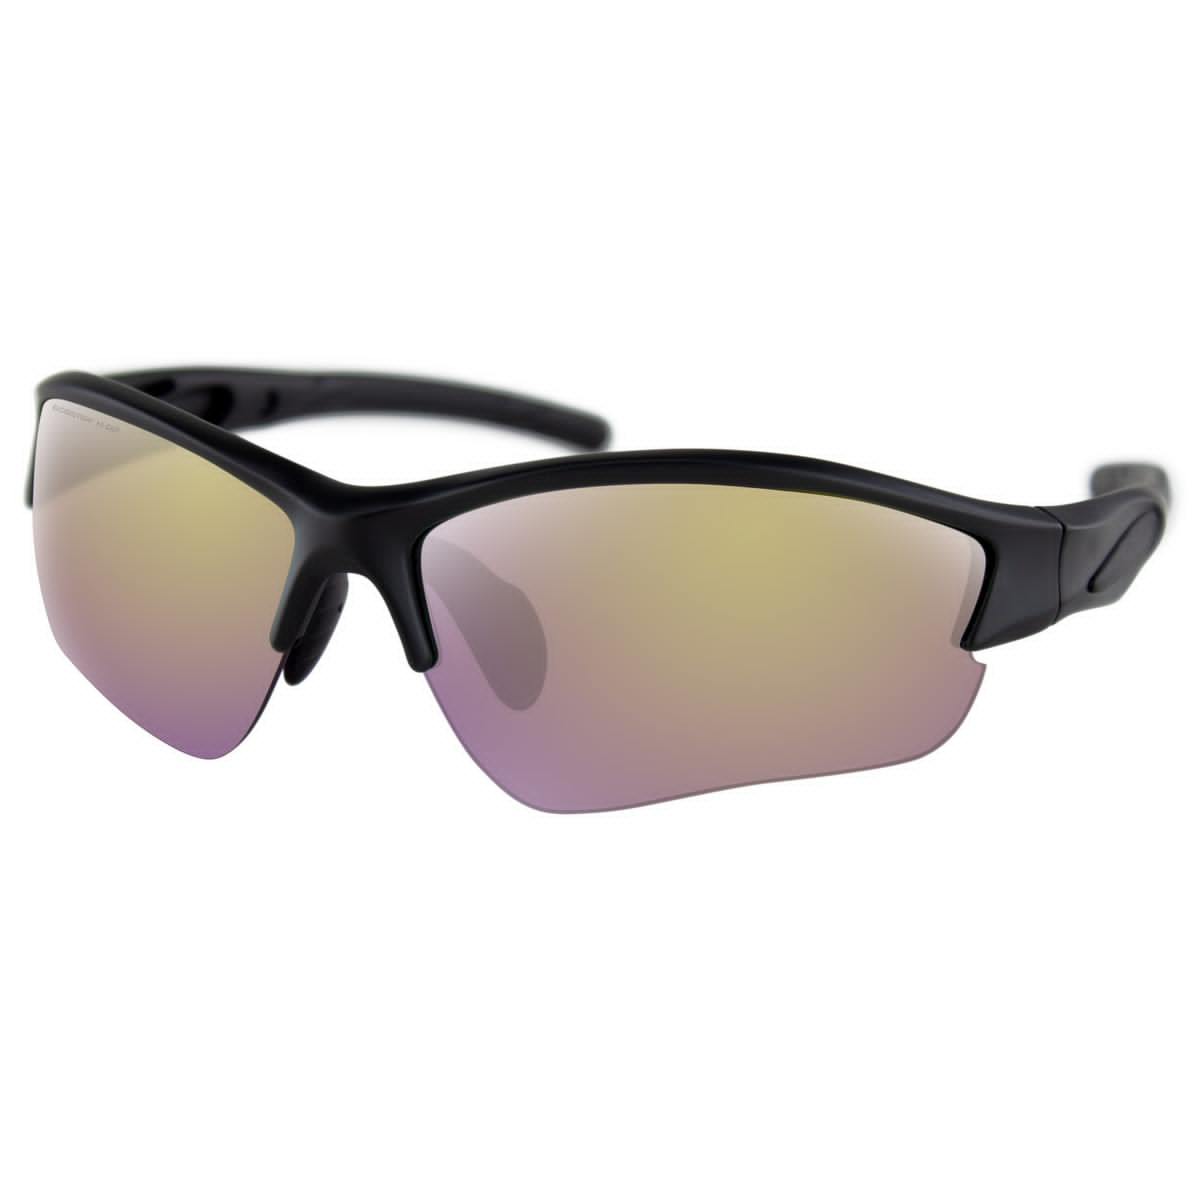 Bobster Rapid Sunglasses, Matte Black Frame, Purple HD Yellow Revo Mirror Lenses - American Legend Rider